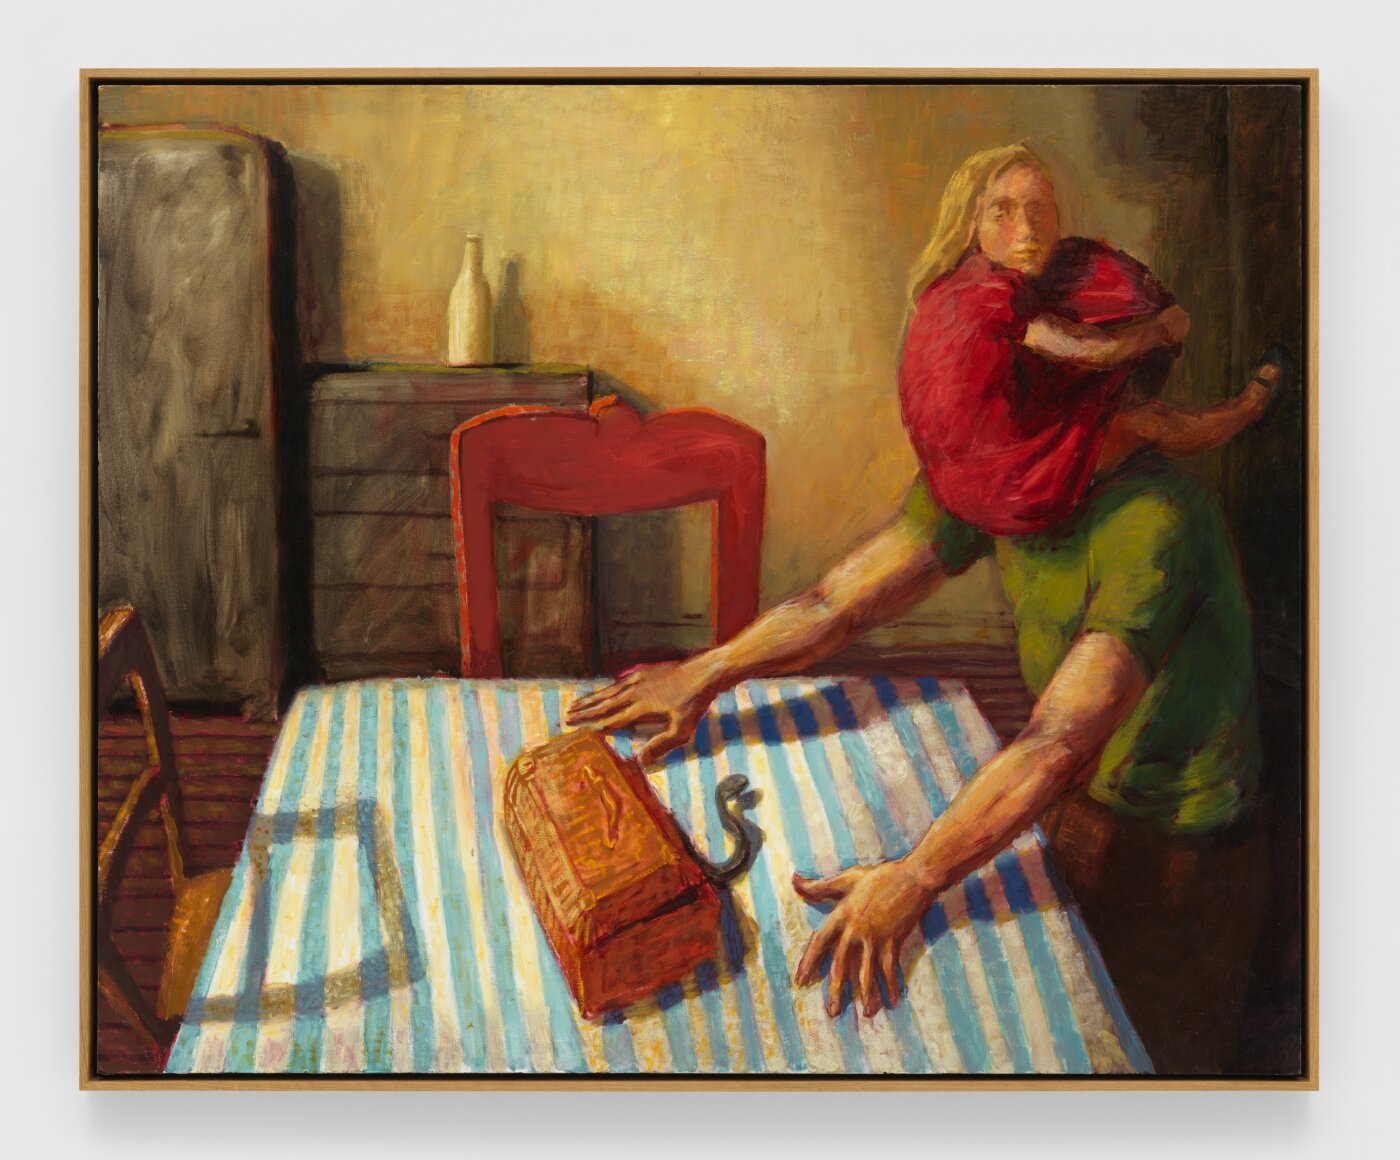   Gold Box , 1988 Oil on canvas 54.13h x 65.5w in (137.32h x 166.37w cm) 